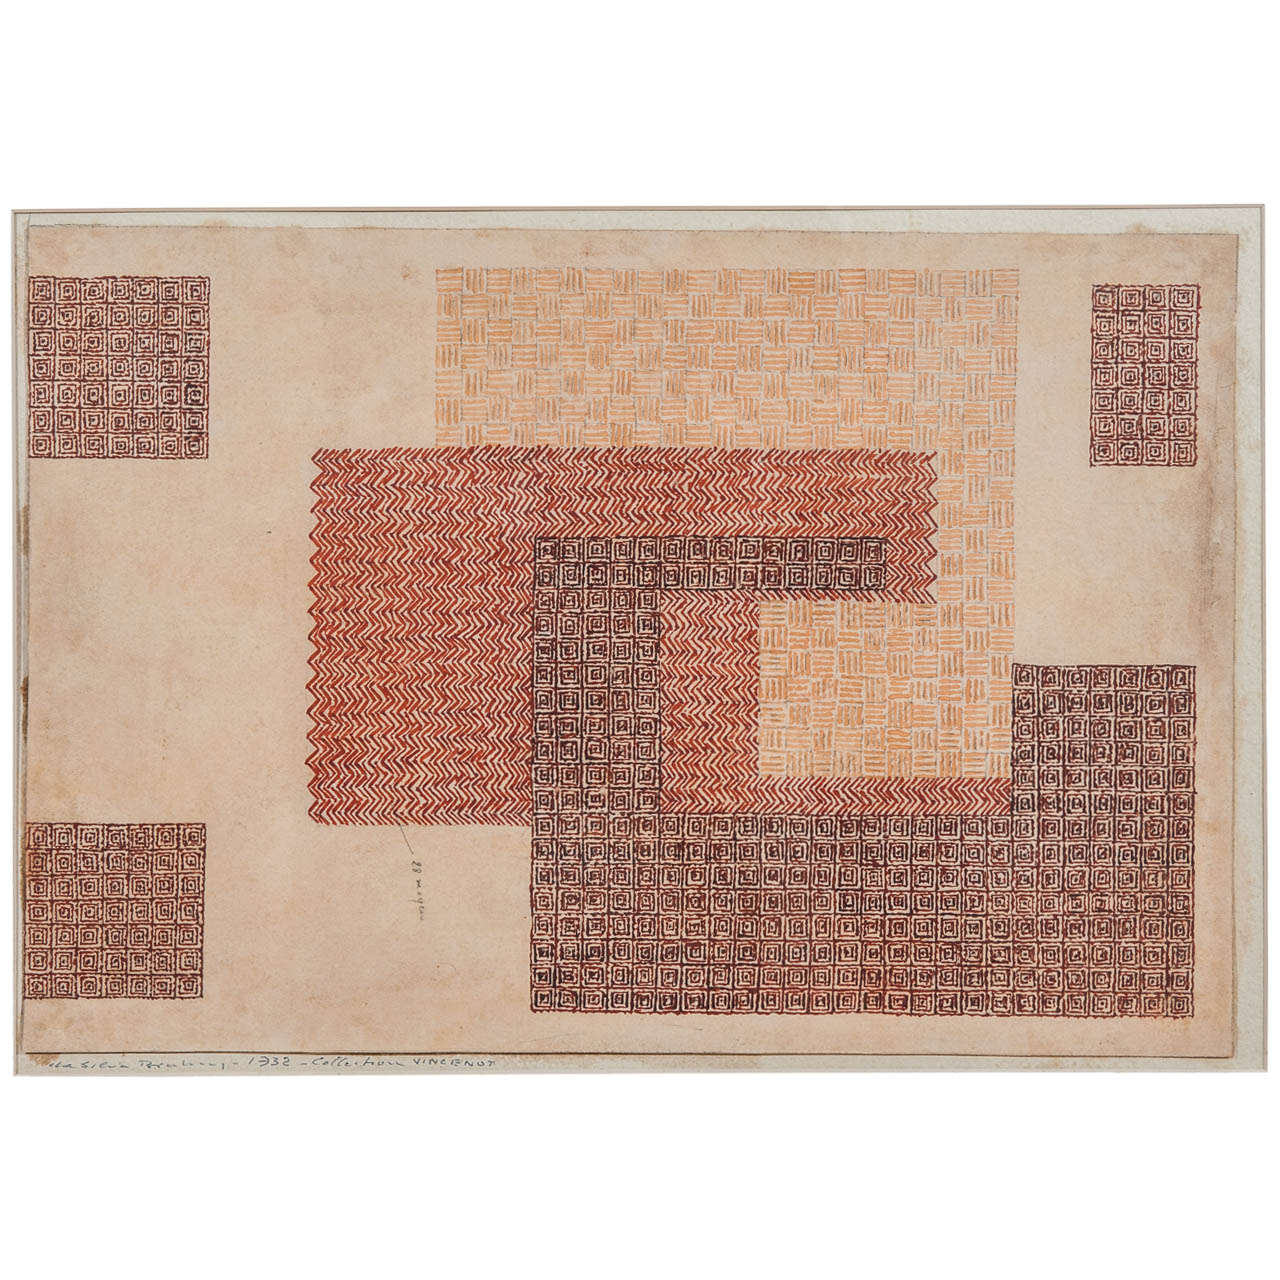 Da Silva Bruhns Cubist Carpet Design Study For Sale